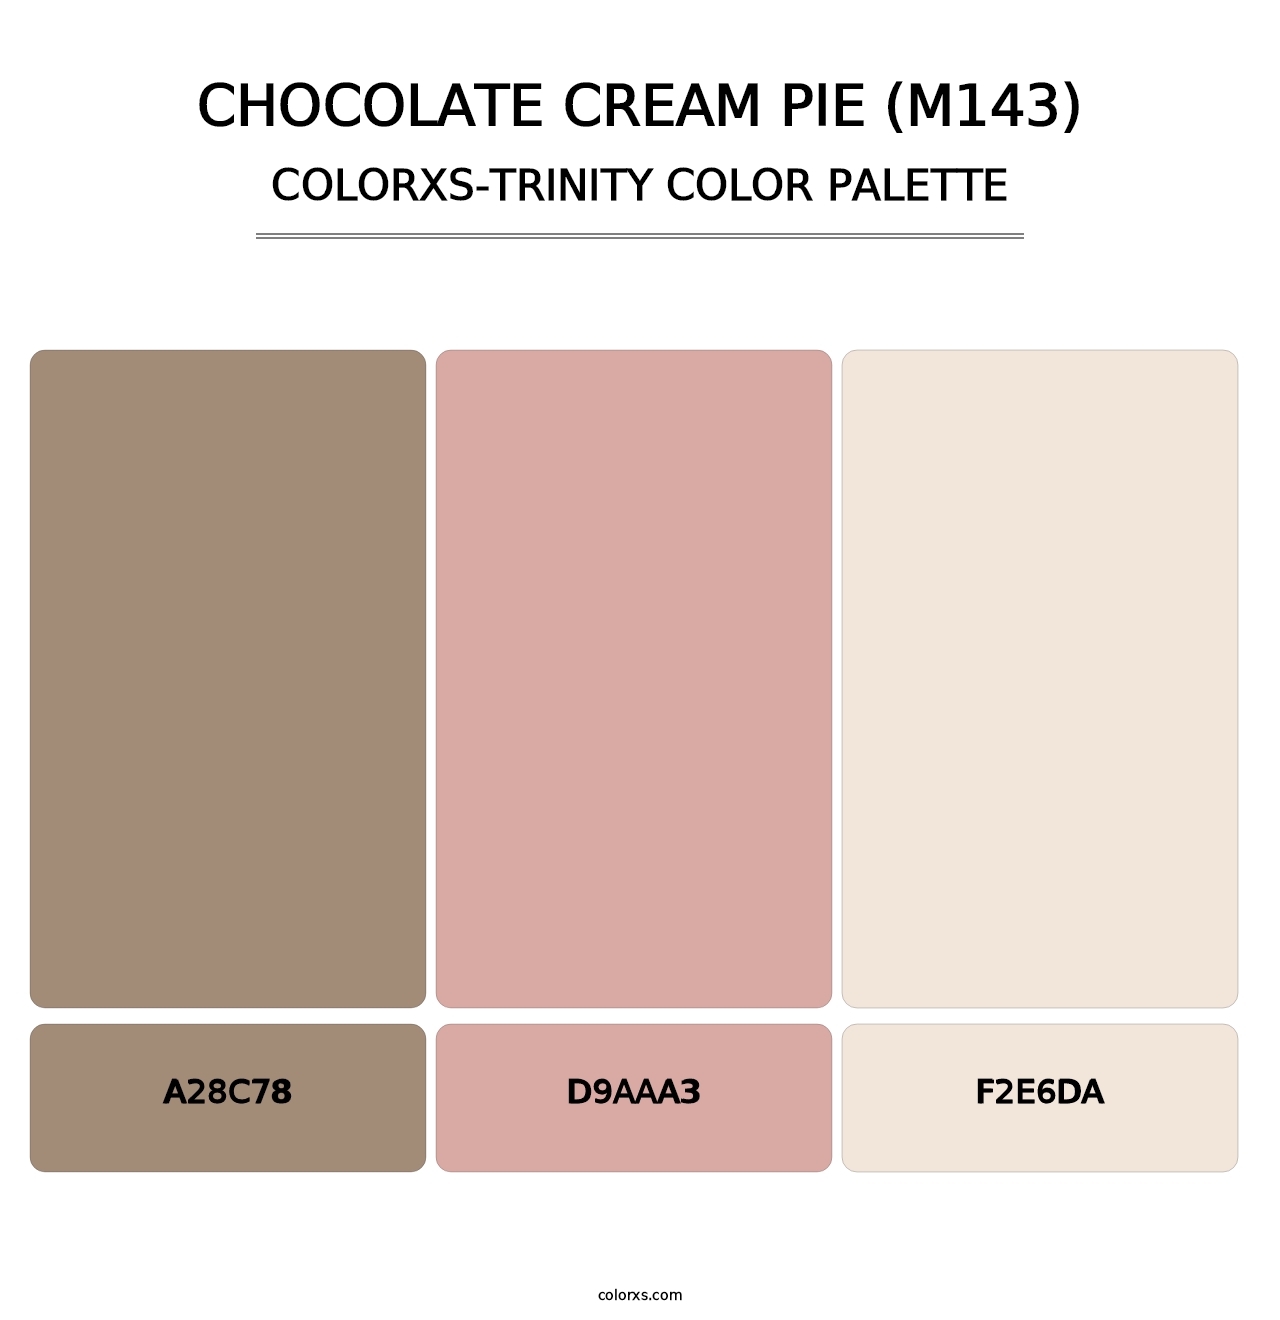 Chocolate Cream Pie (M143) - Colorxs Trinity Palette